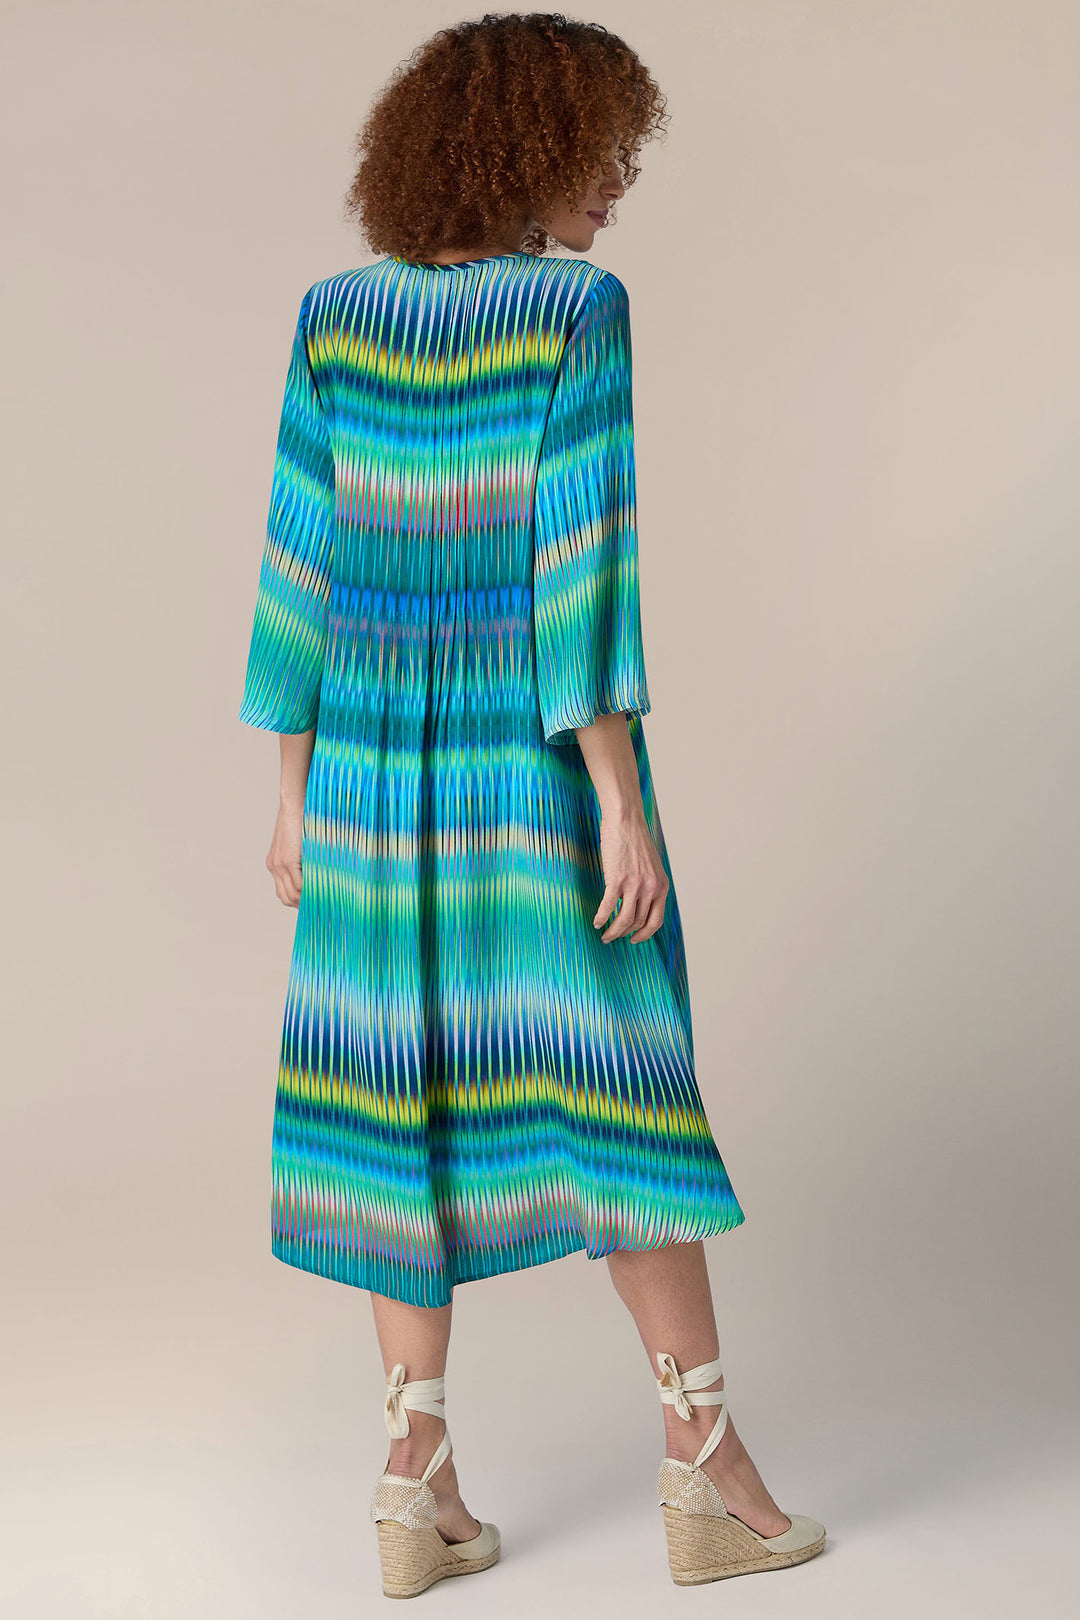 Sahara GRD5798-IZZM Turquoise Blue Zig Zag Print Dress - Experience Boutique